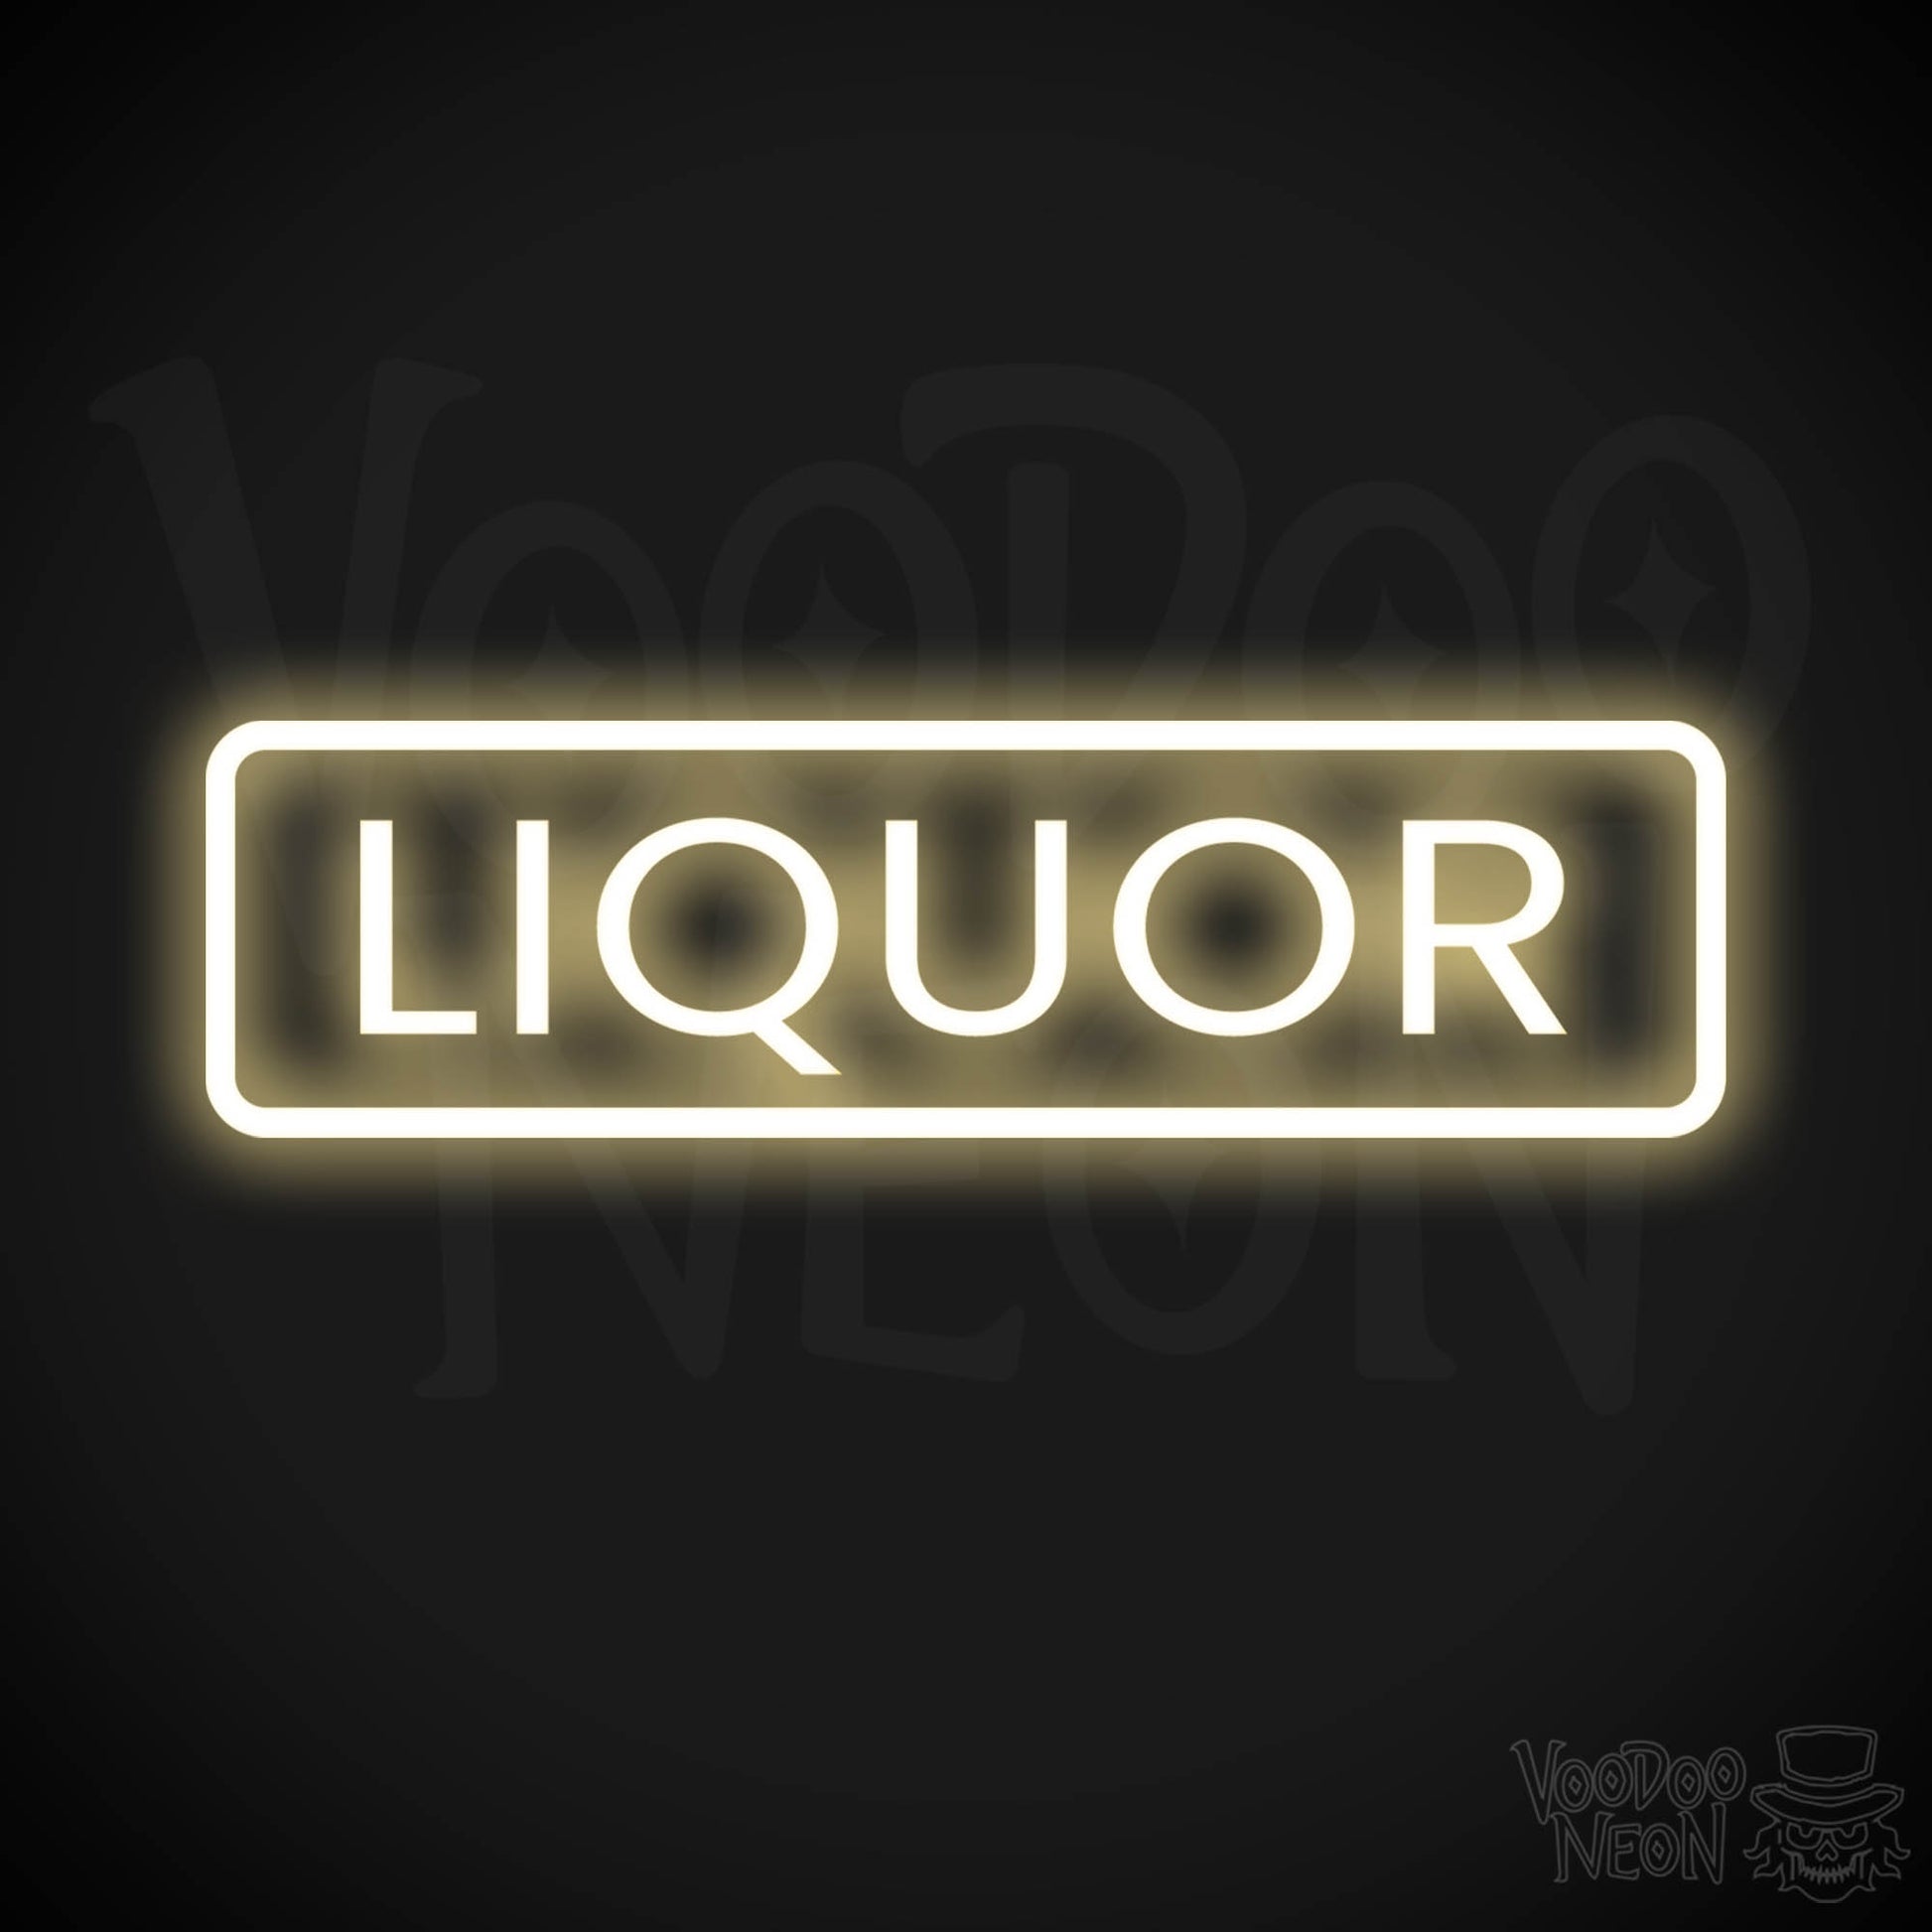 Liquor Store LED Neon - Warm White